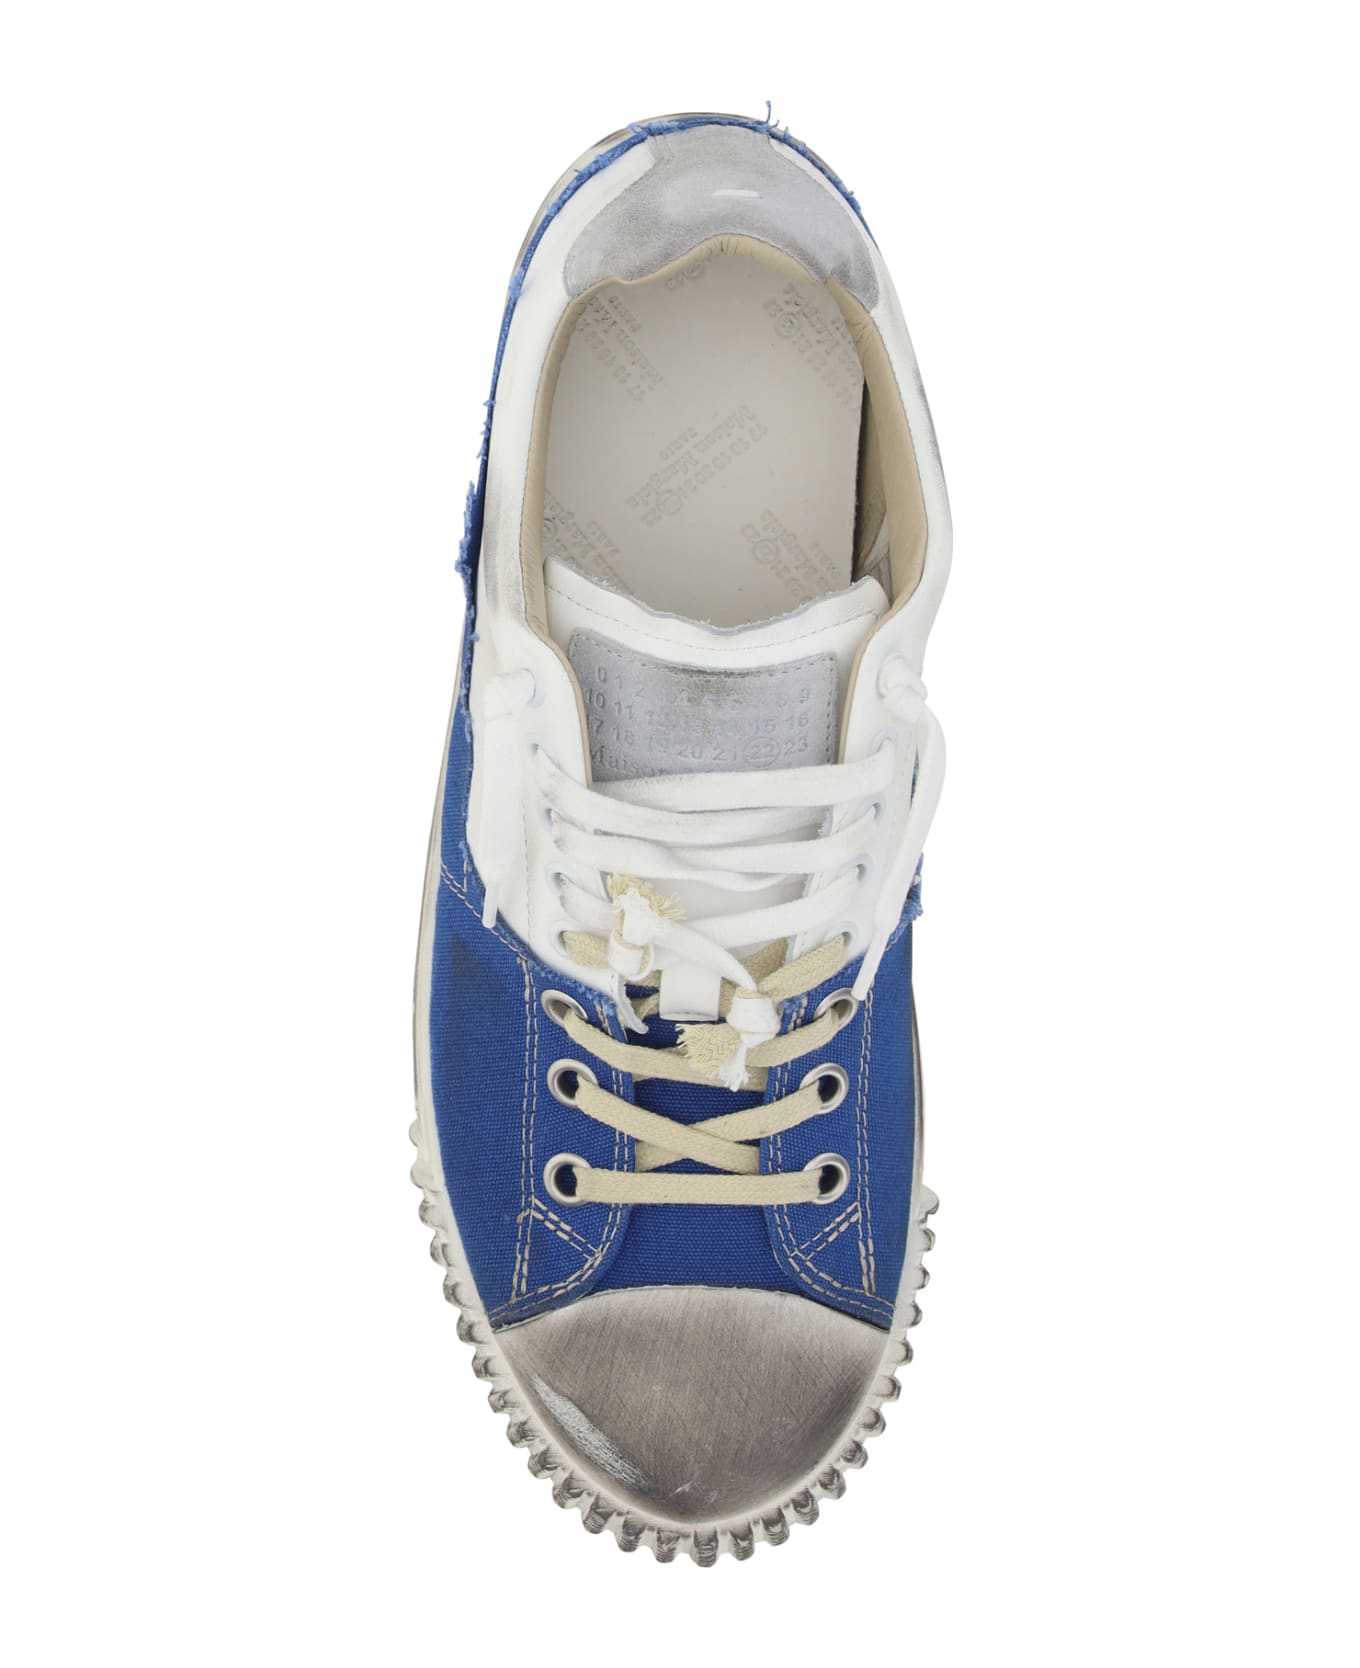 Maison Margiela New Evolution Sneakers - Blue/white